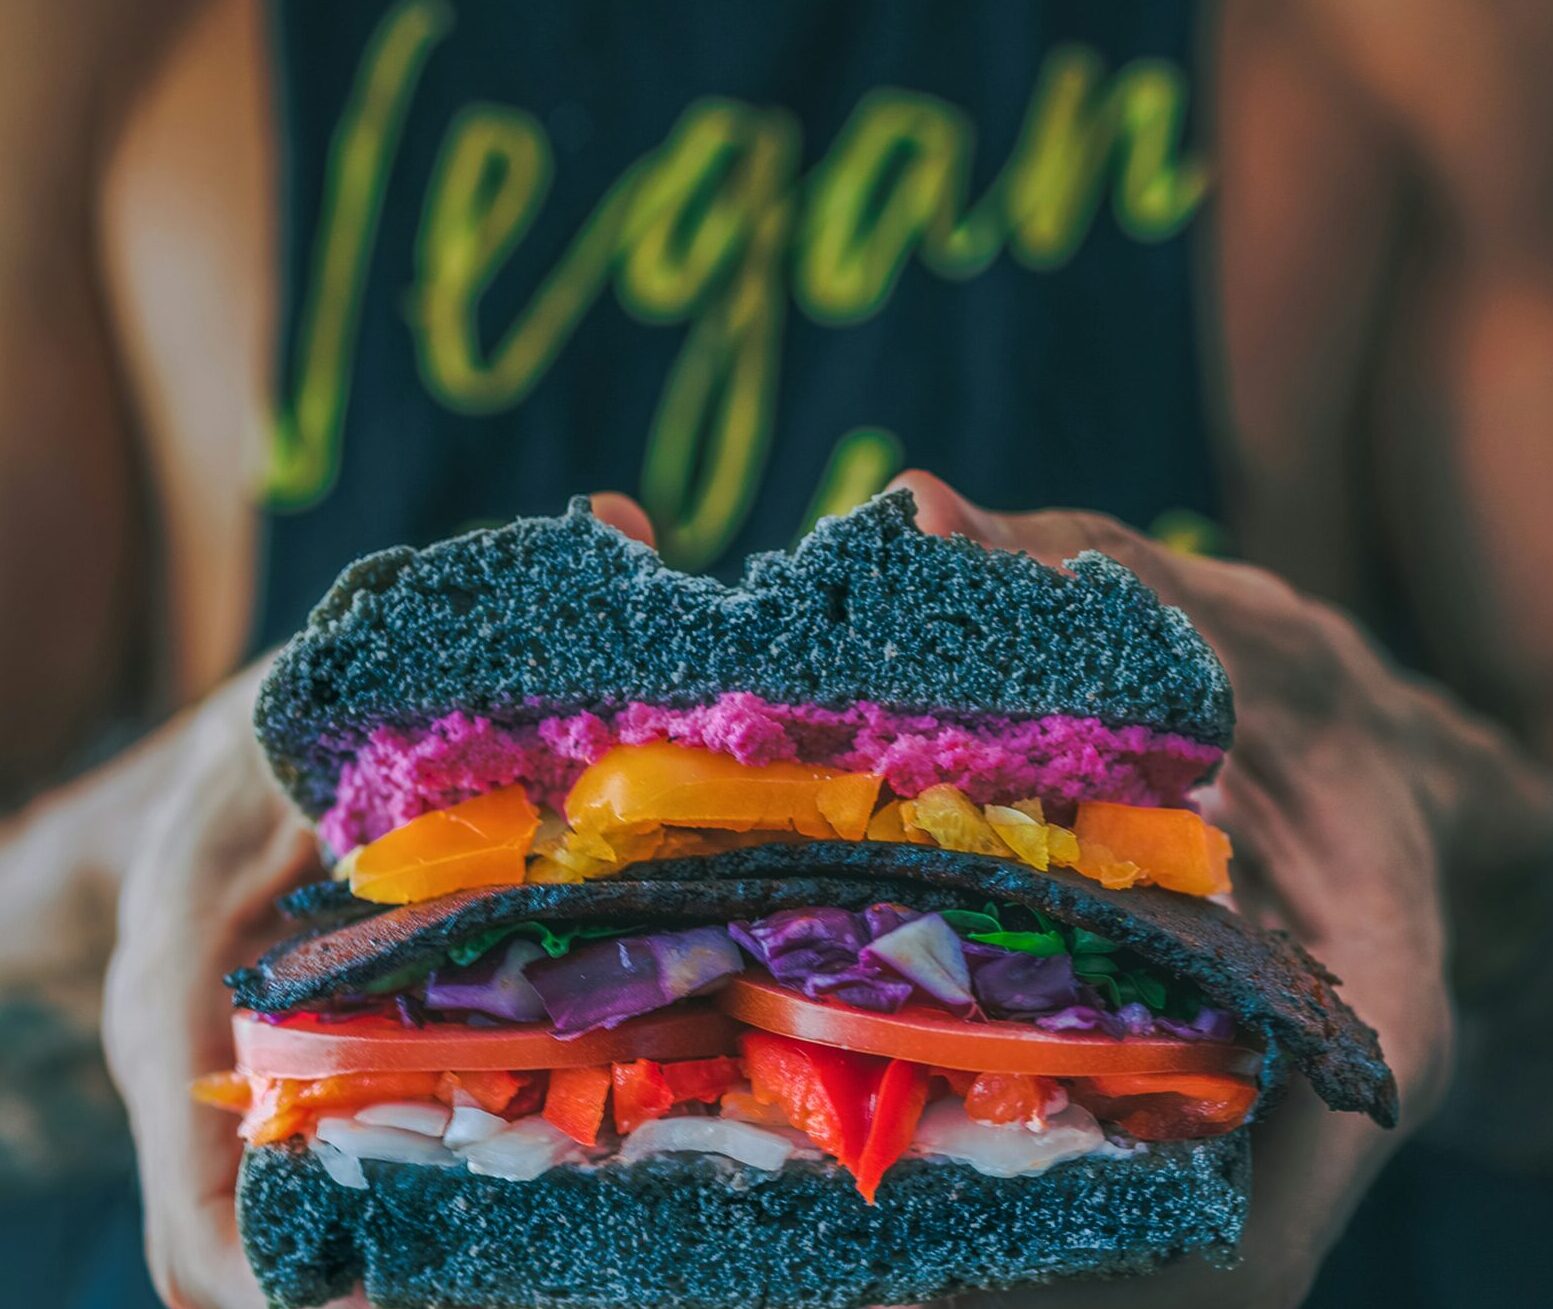 Government recognises vegan diet as viable option for all Australians